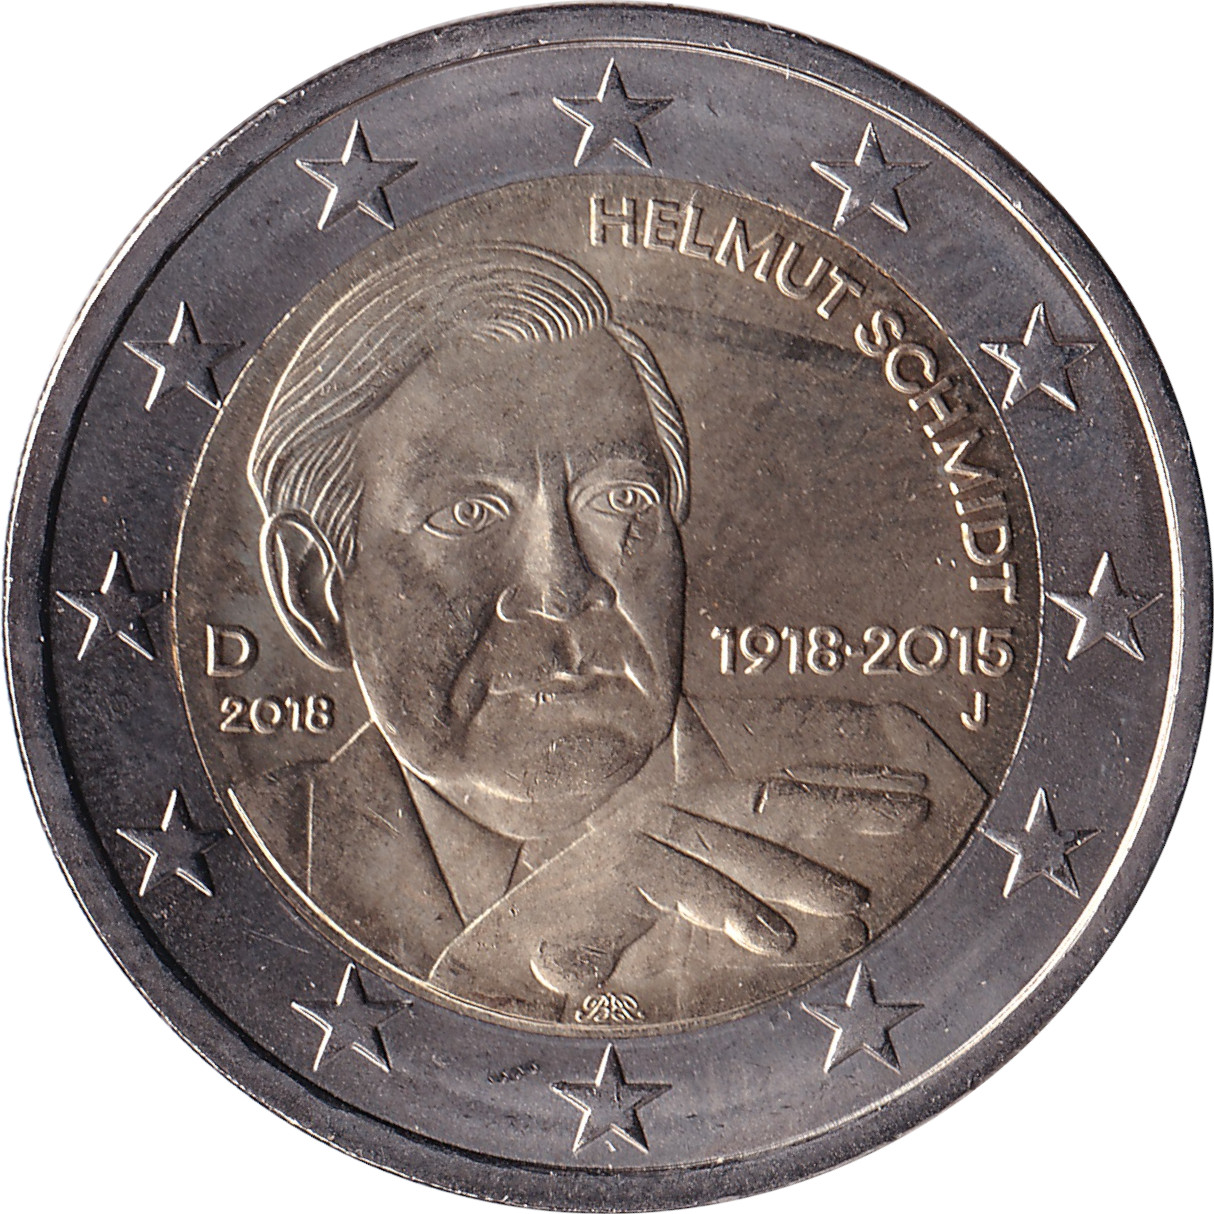 2 euro - Helmut Schmidt